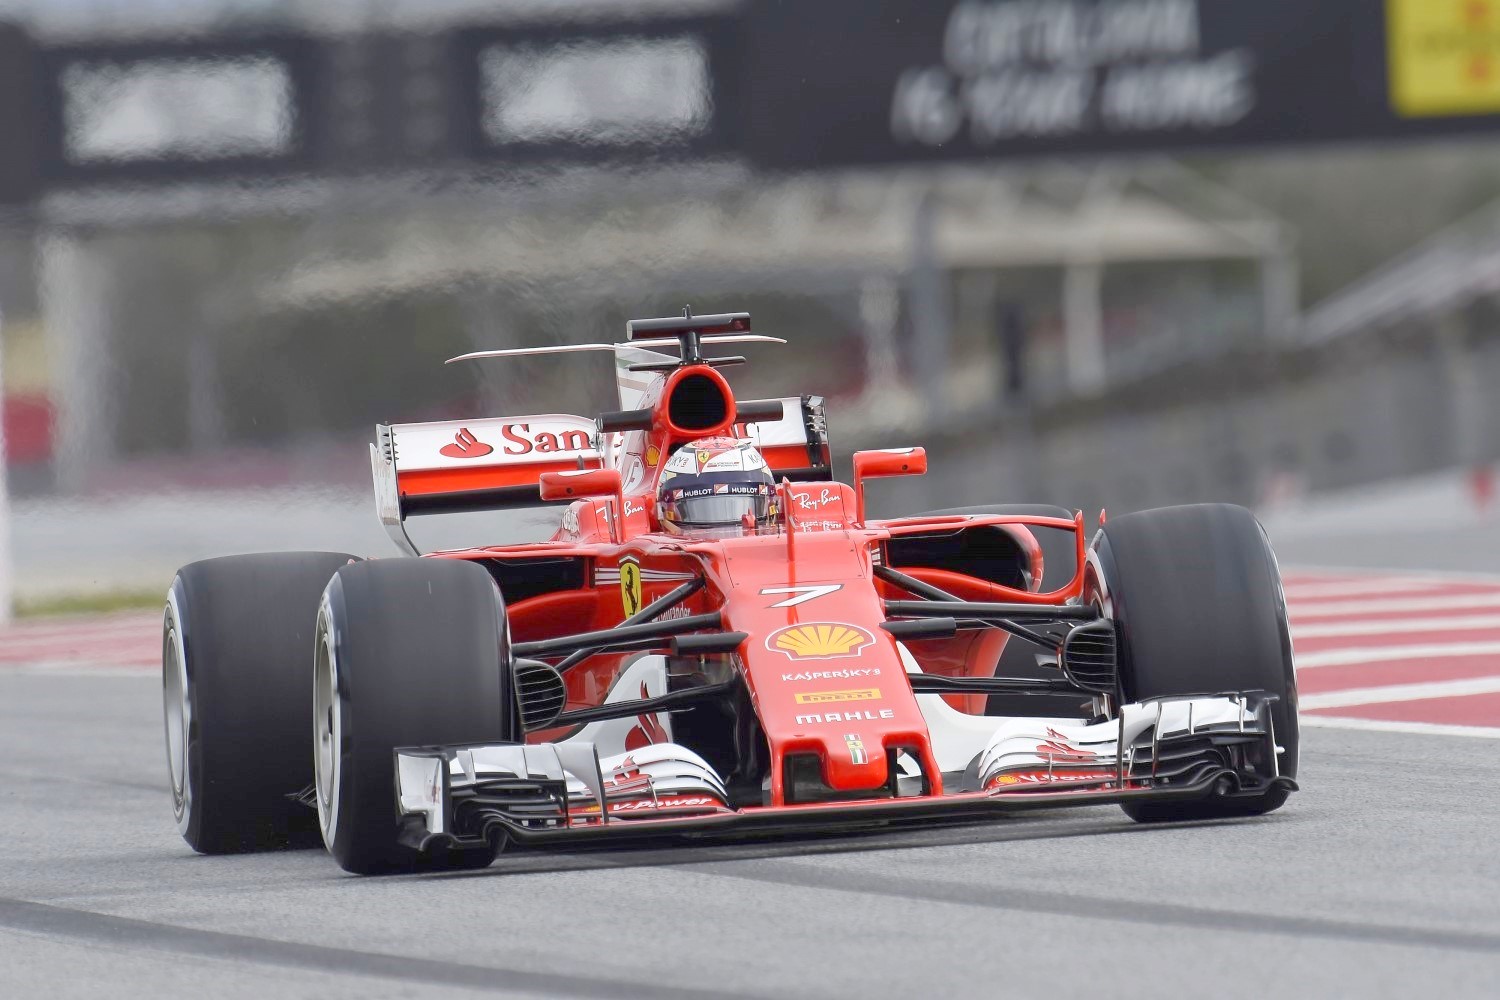 Raikkonen crashes the Ferrari